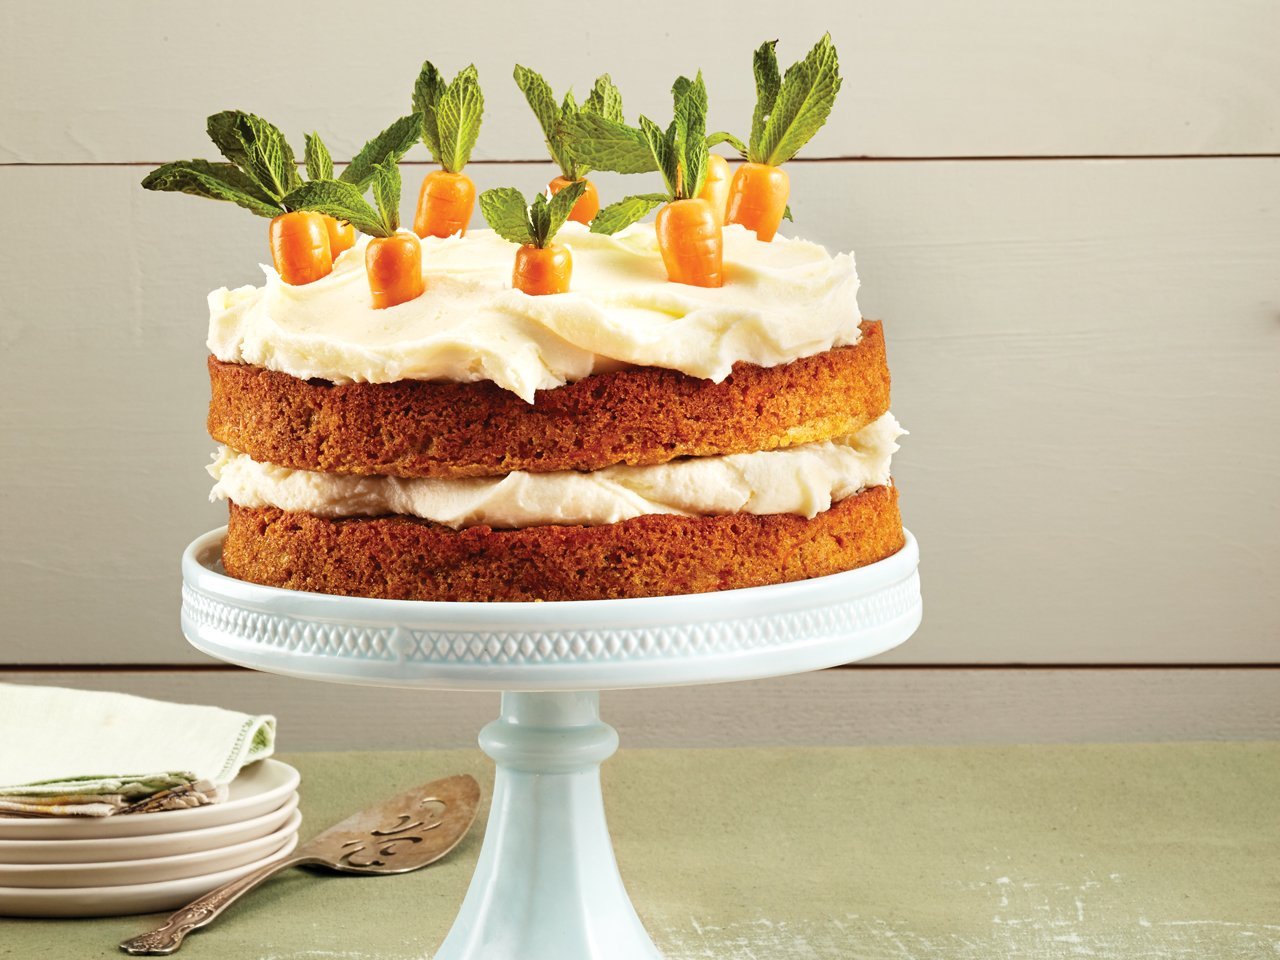 Крем чиз энди. Торт морковный Питер Фрост. Кэррот кейк торт. Морковный торт Carrot Cake. Морковный торт с кремом чиз.